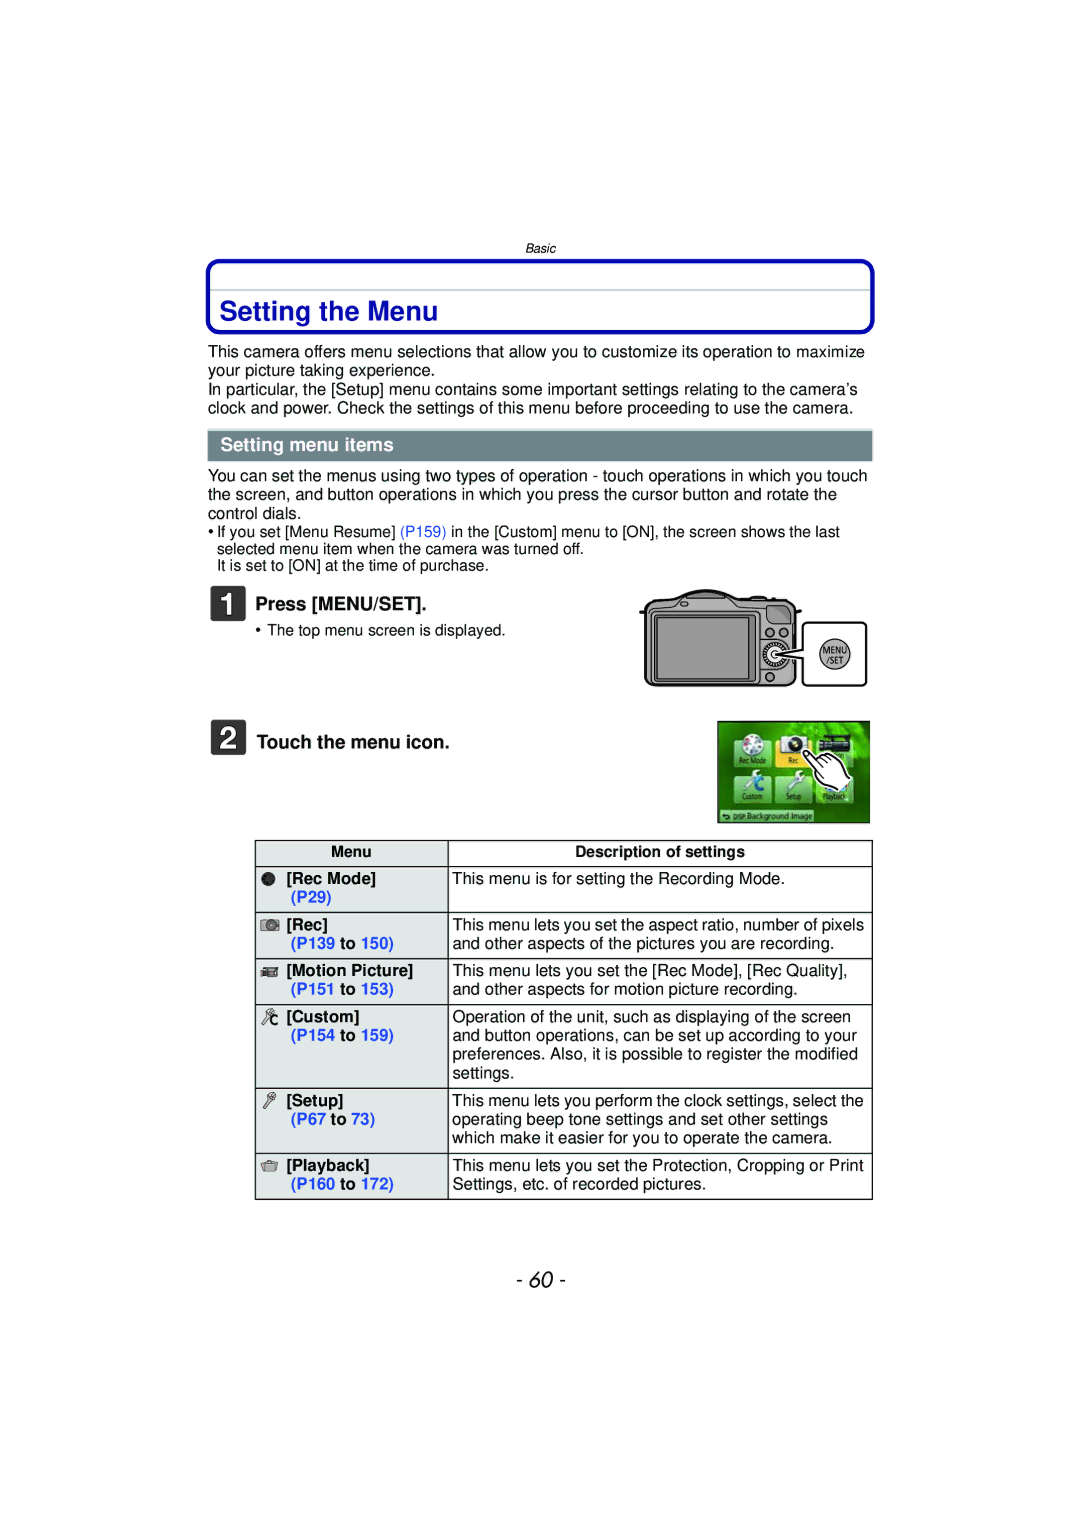 Panasonic DMC-GF5 owner manual Setting the Menu, Setting menu items, Press MENU/SET, Touch the menu icon 